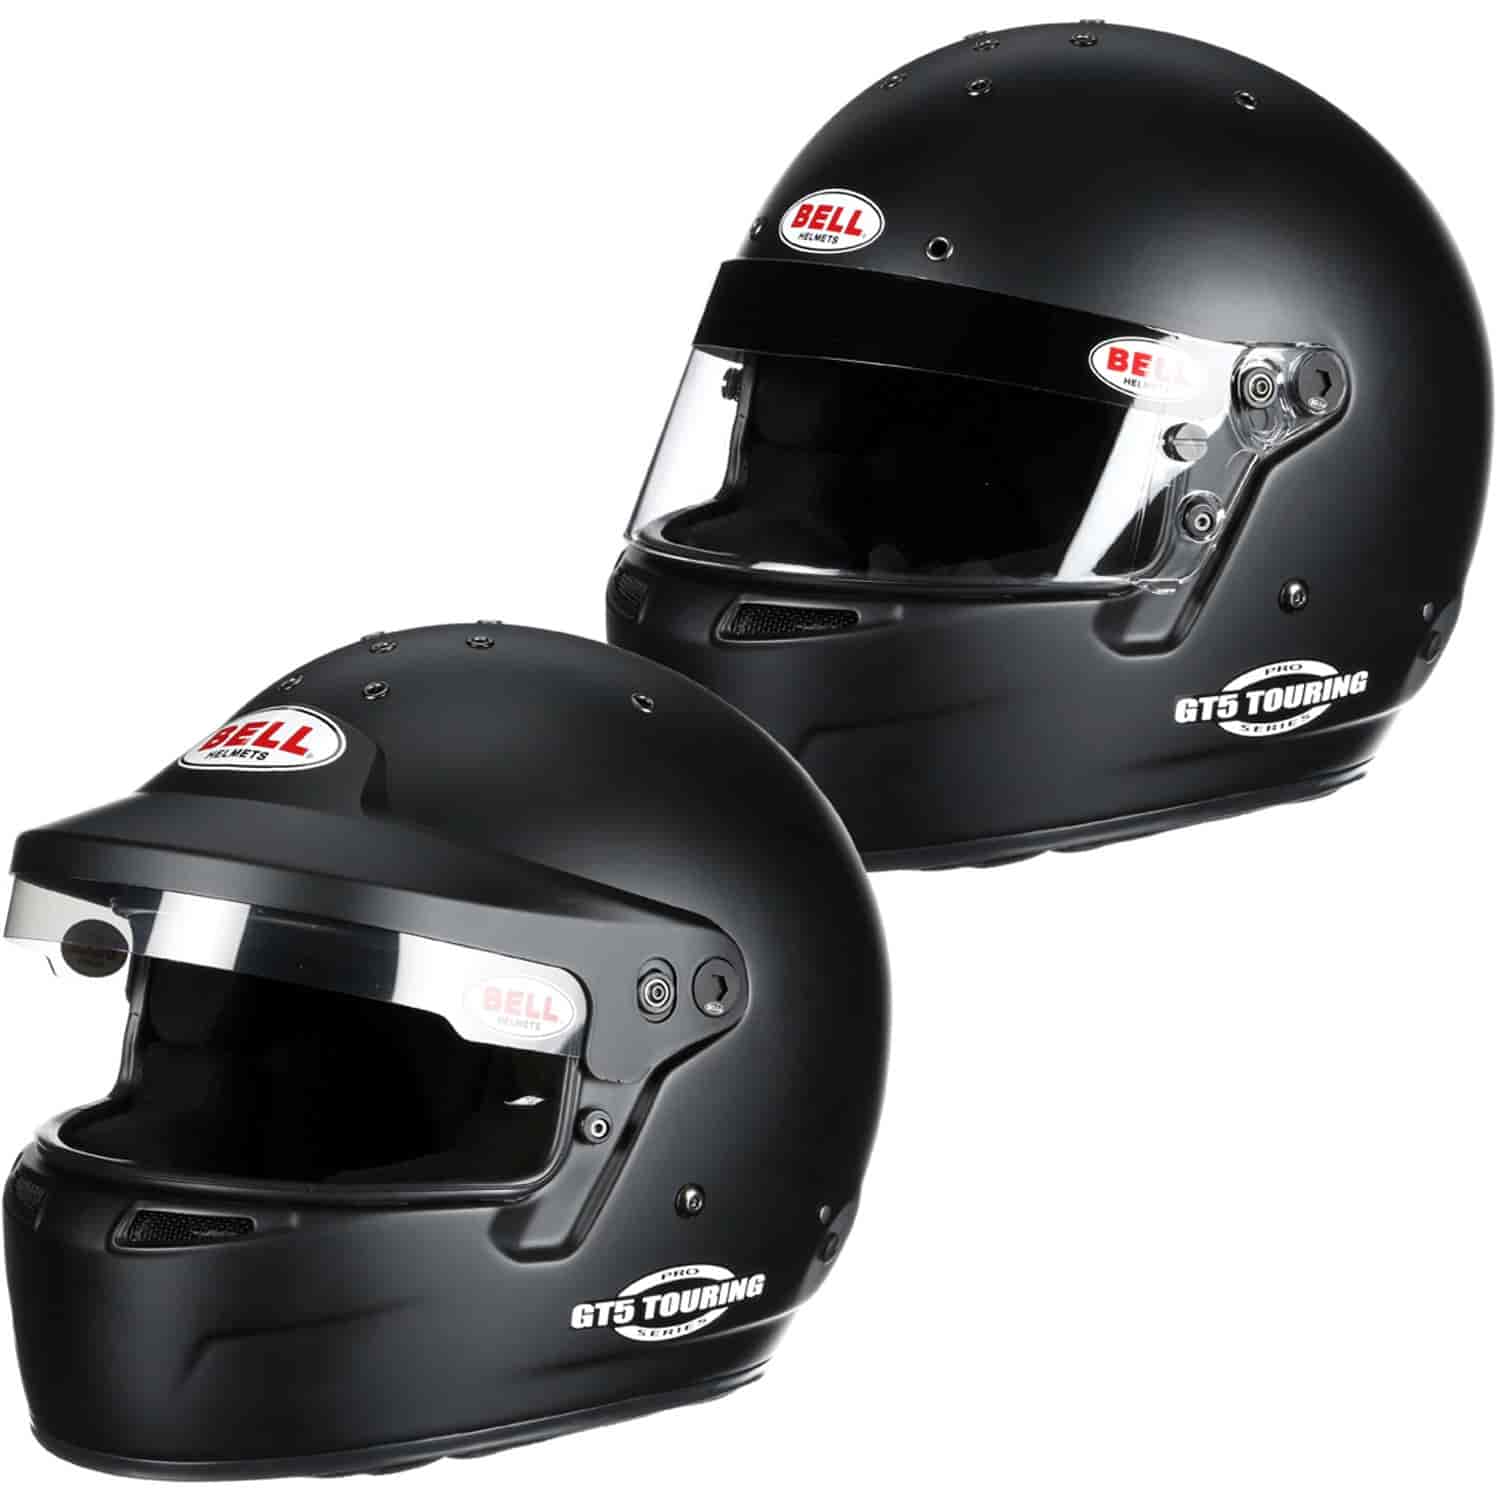 GT5 Touring Helmet SA2015 Certified